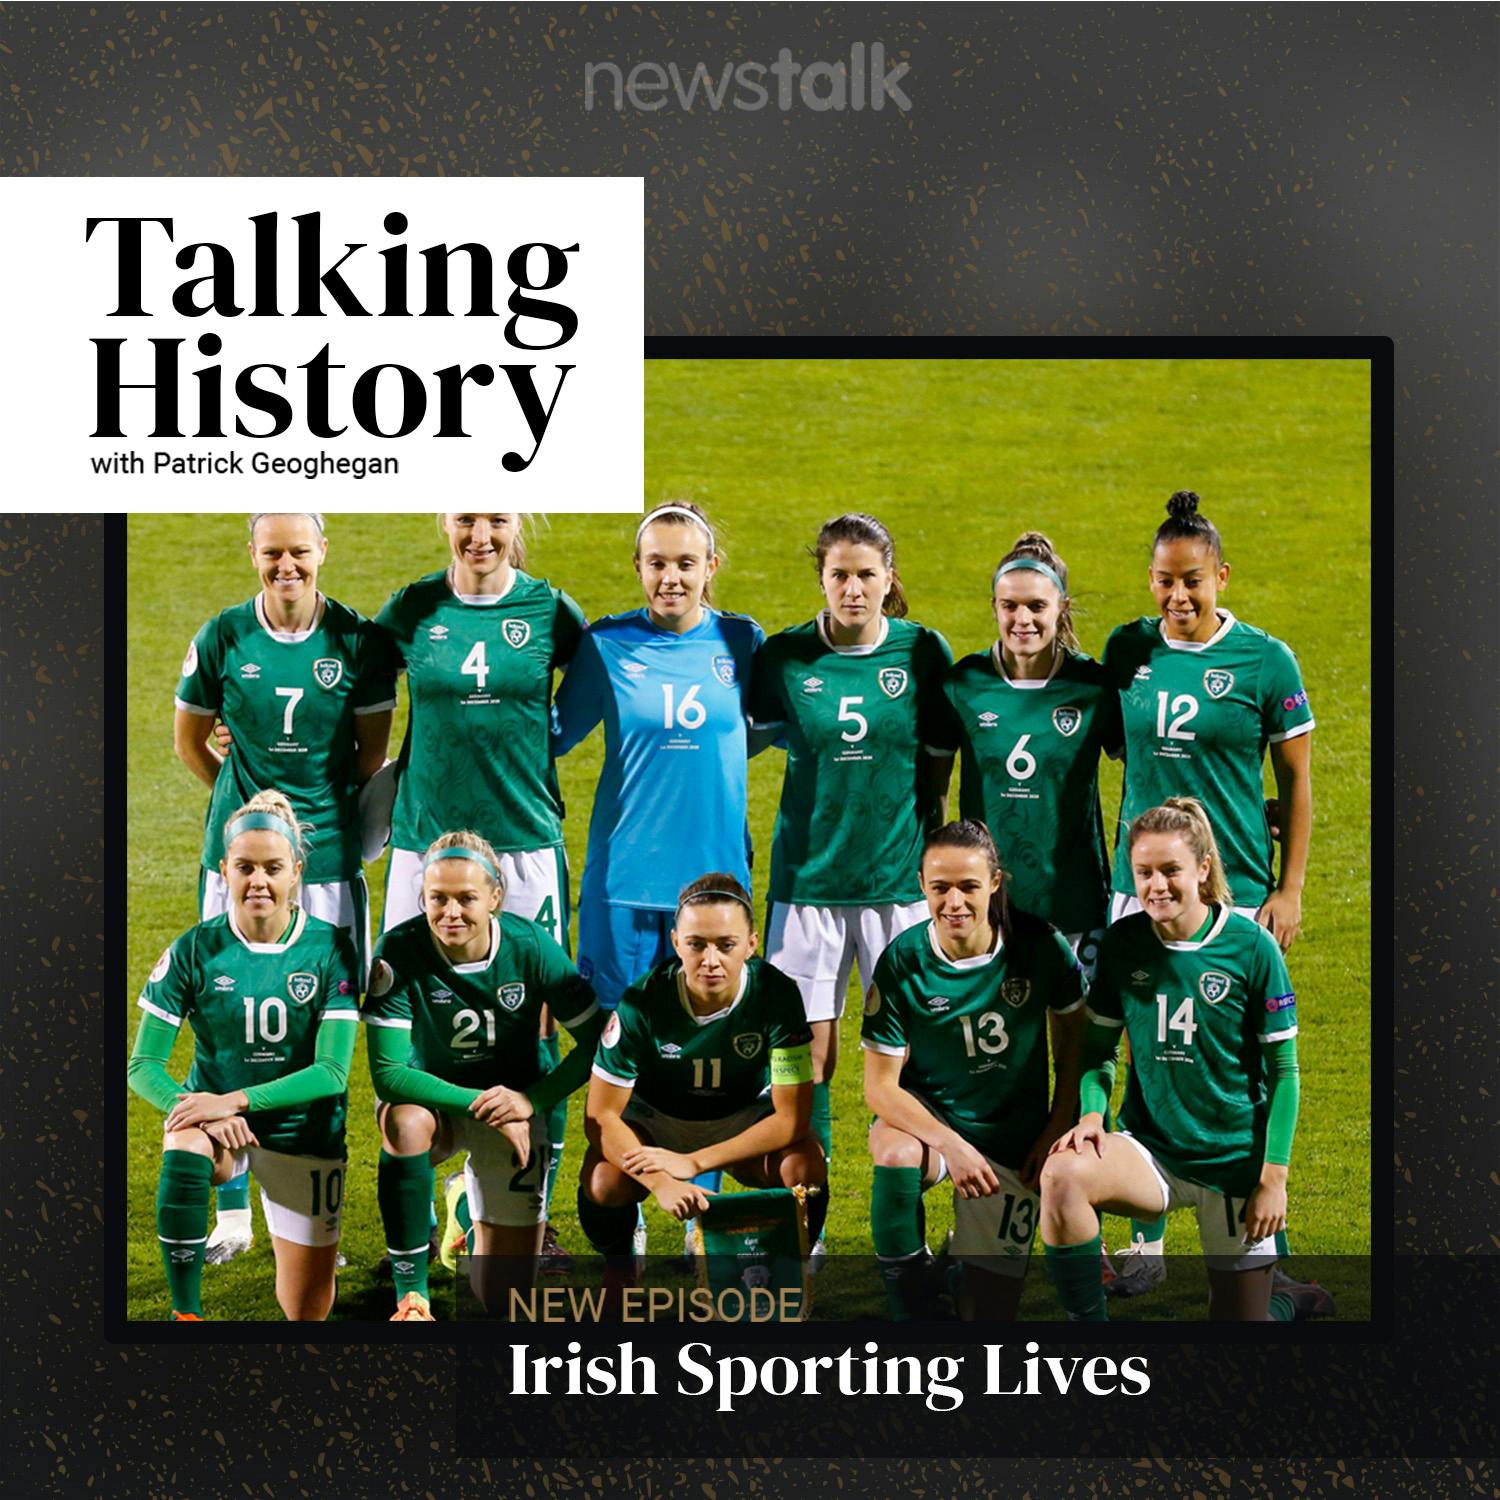 Irish Sporting Lives